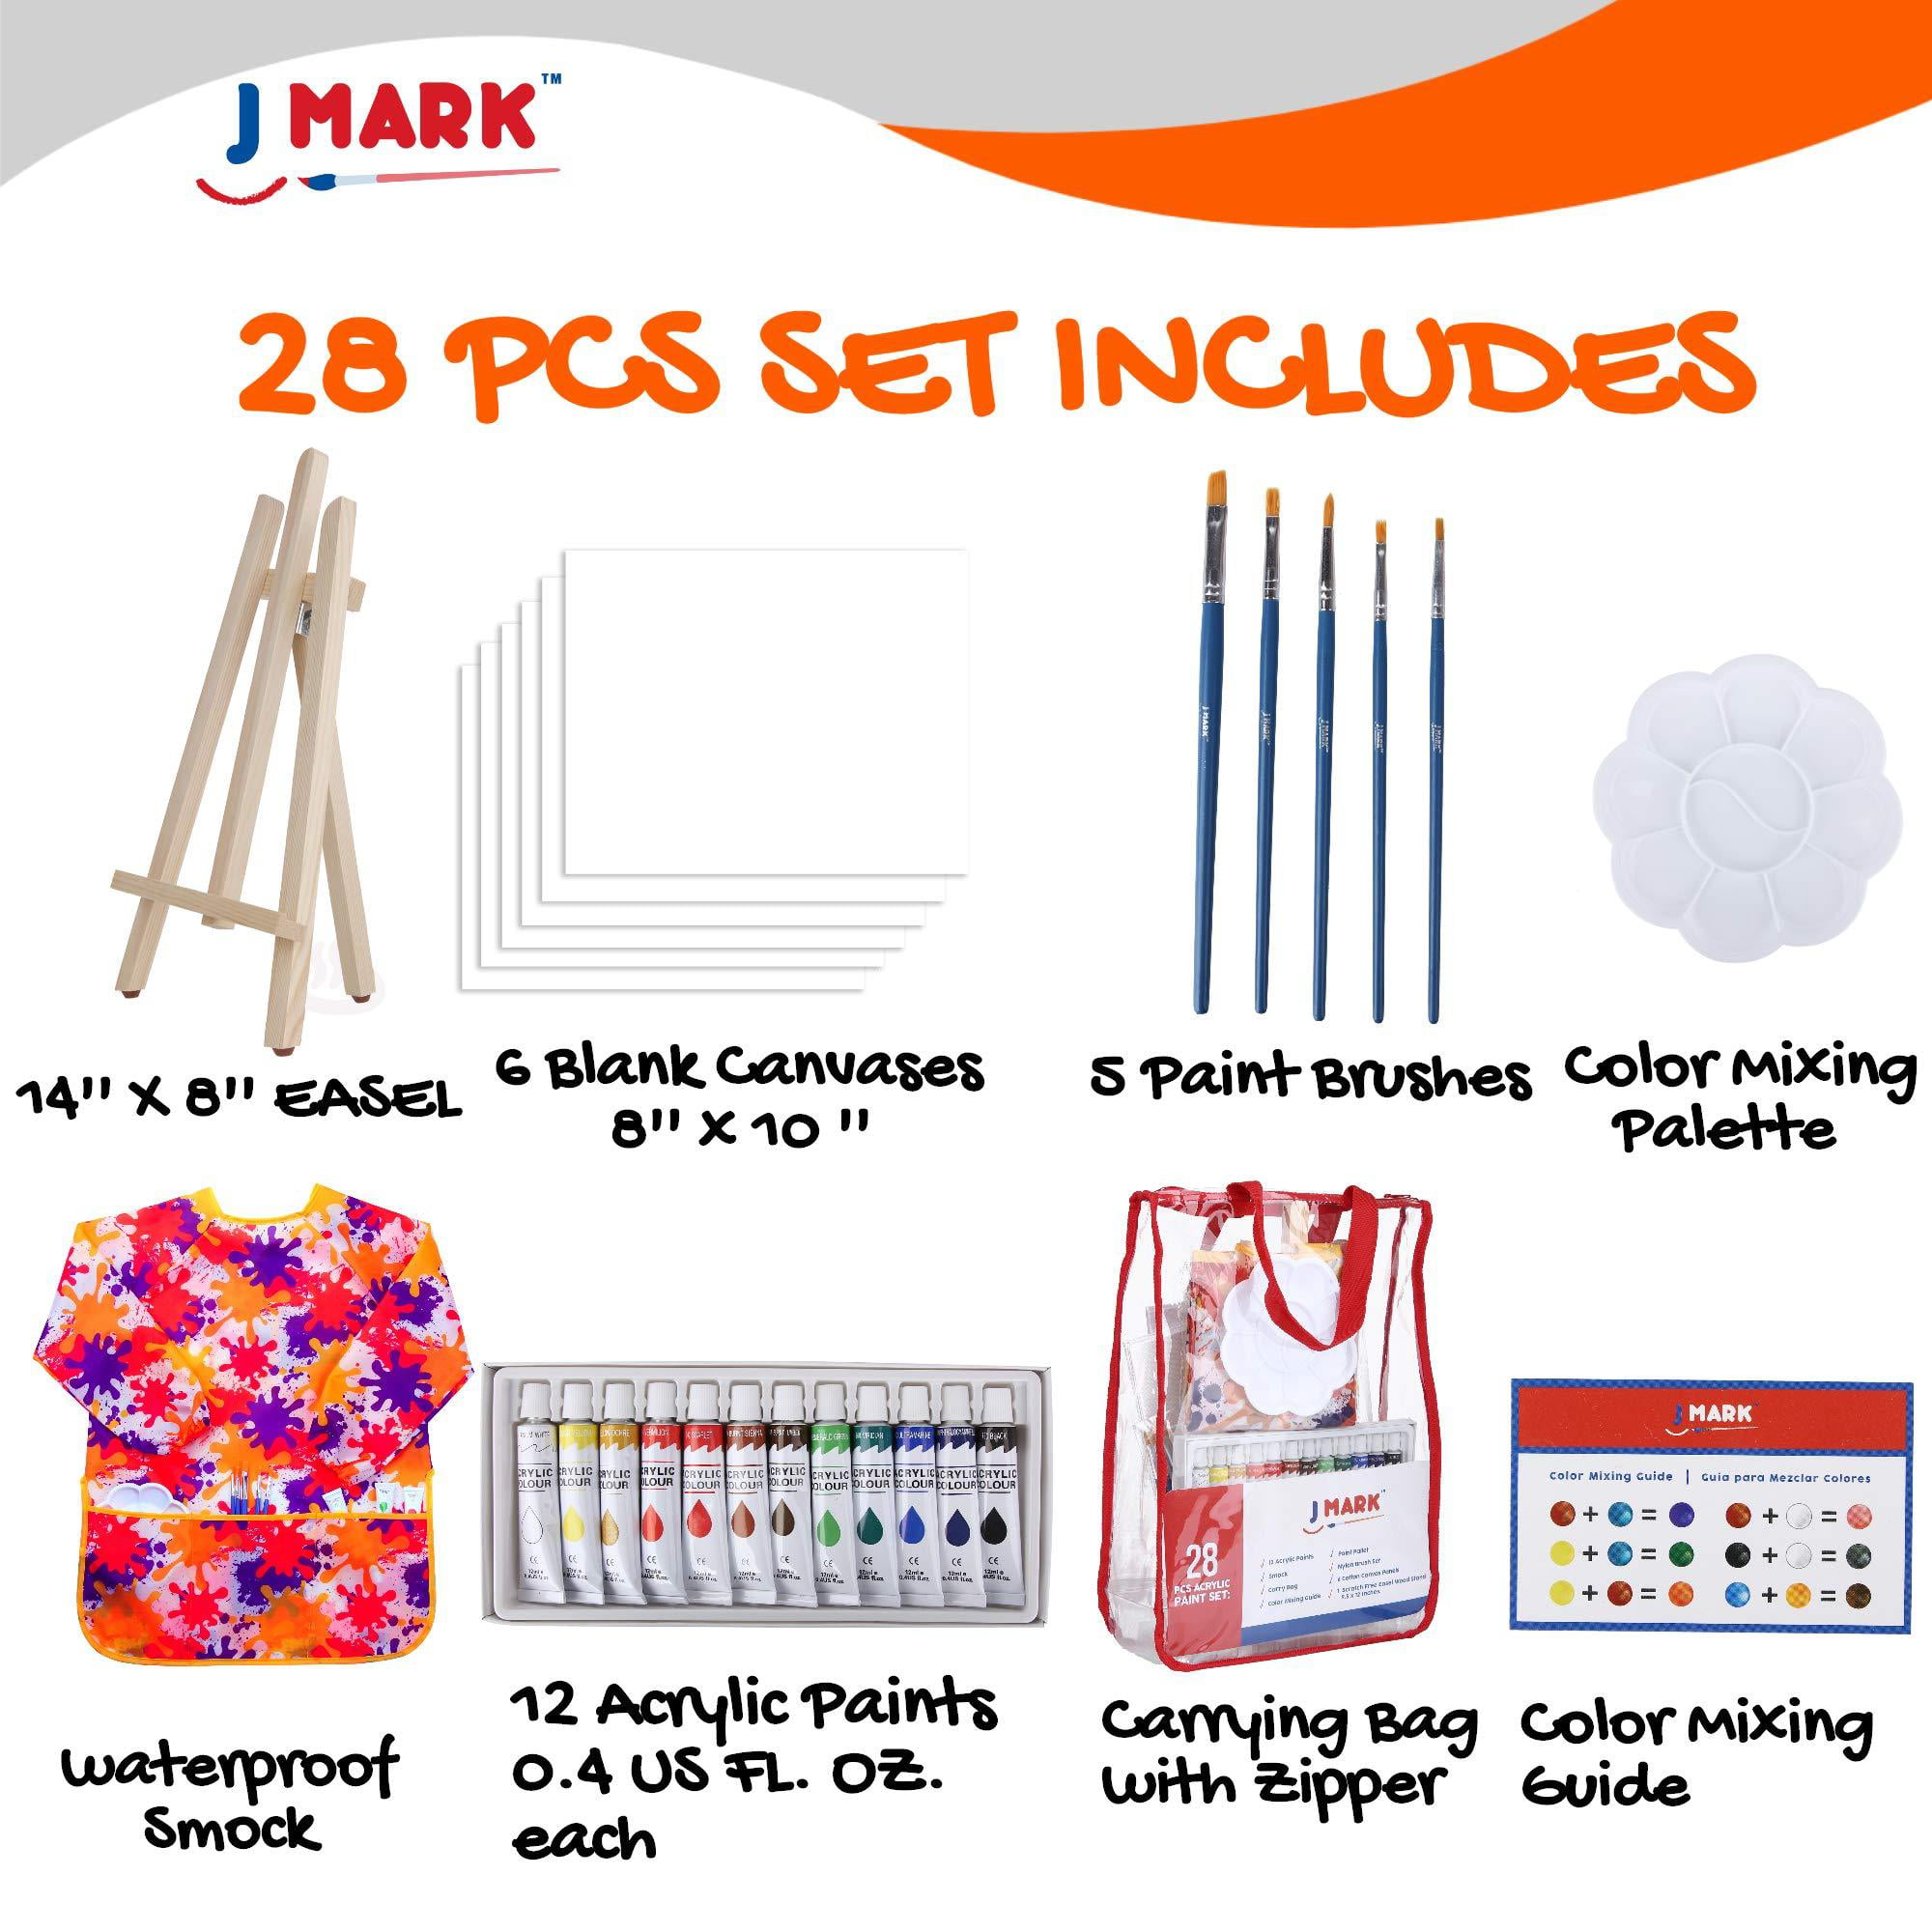  J MARK Painting Kit Includes Acrylic Paint Set, 8 x 10